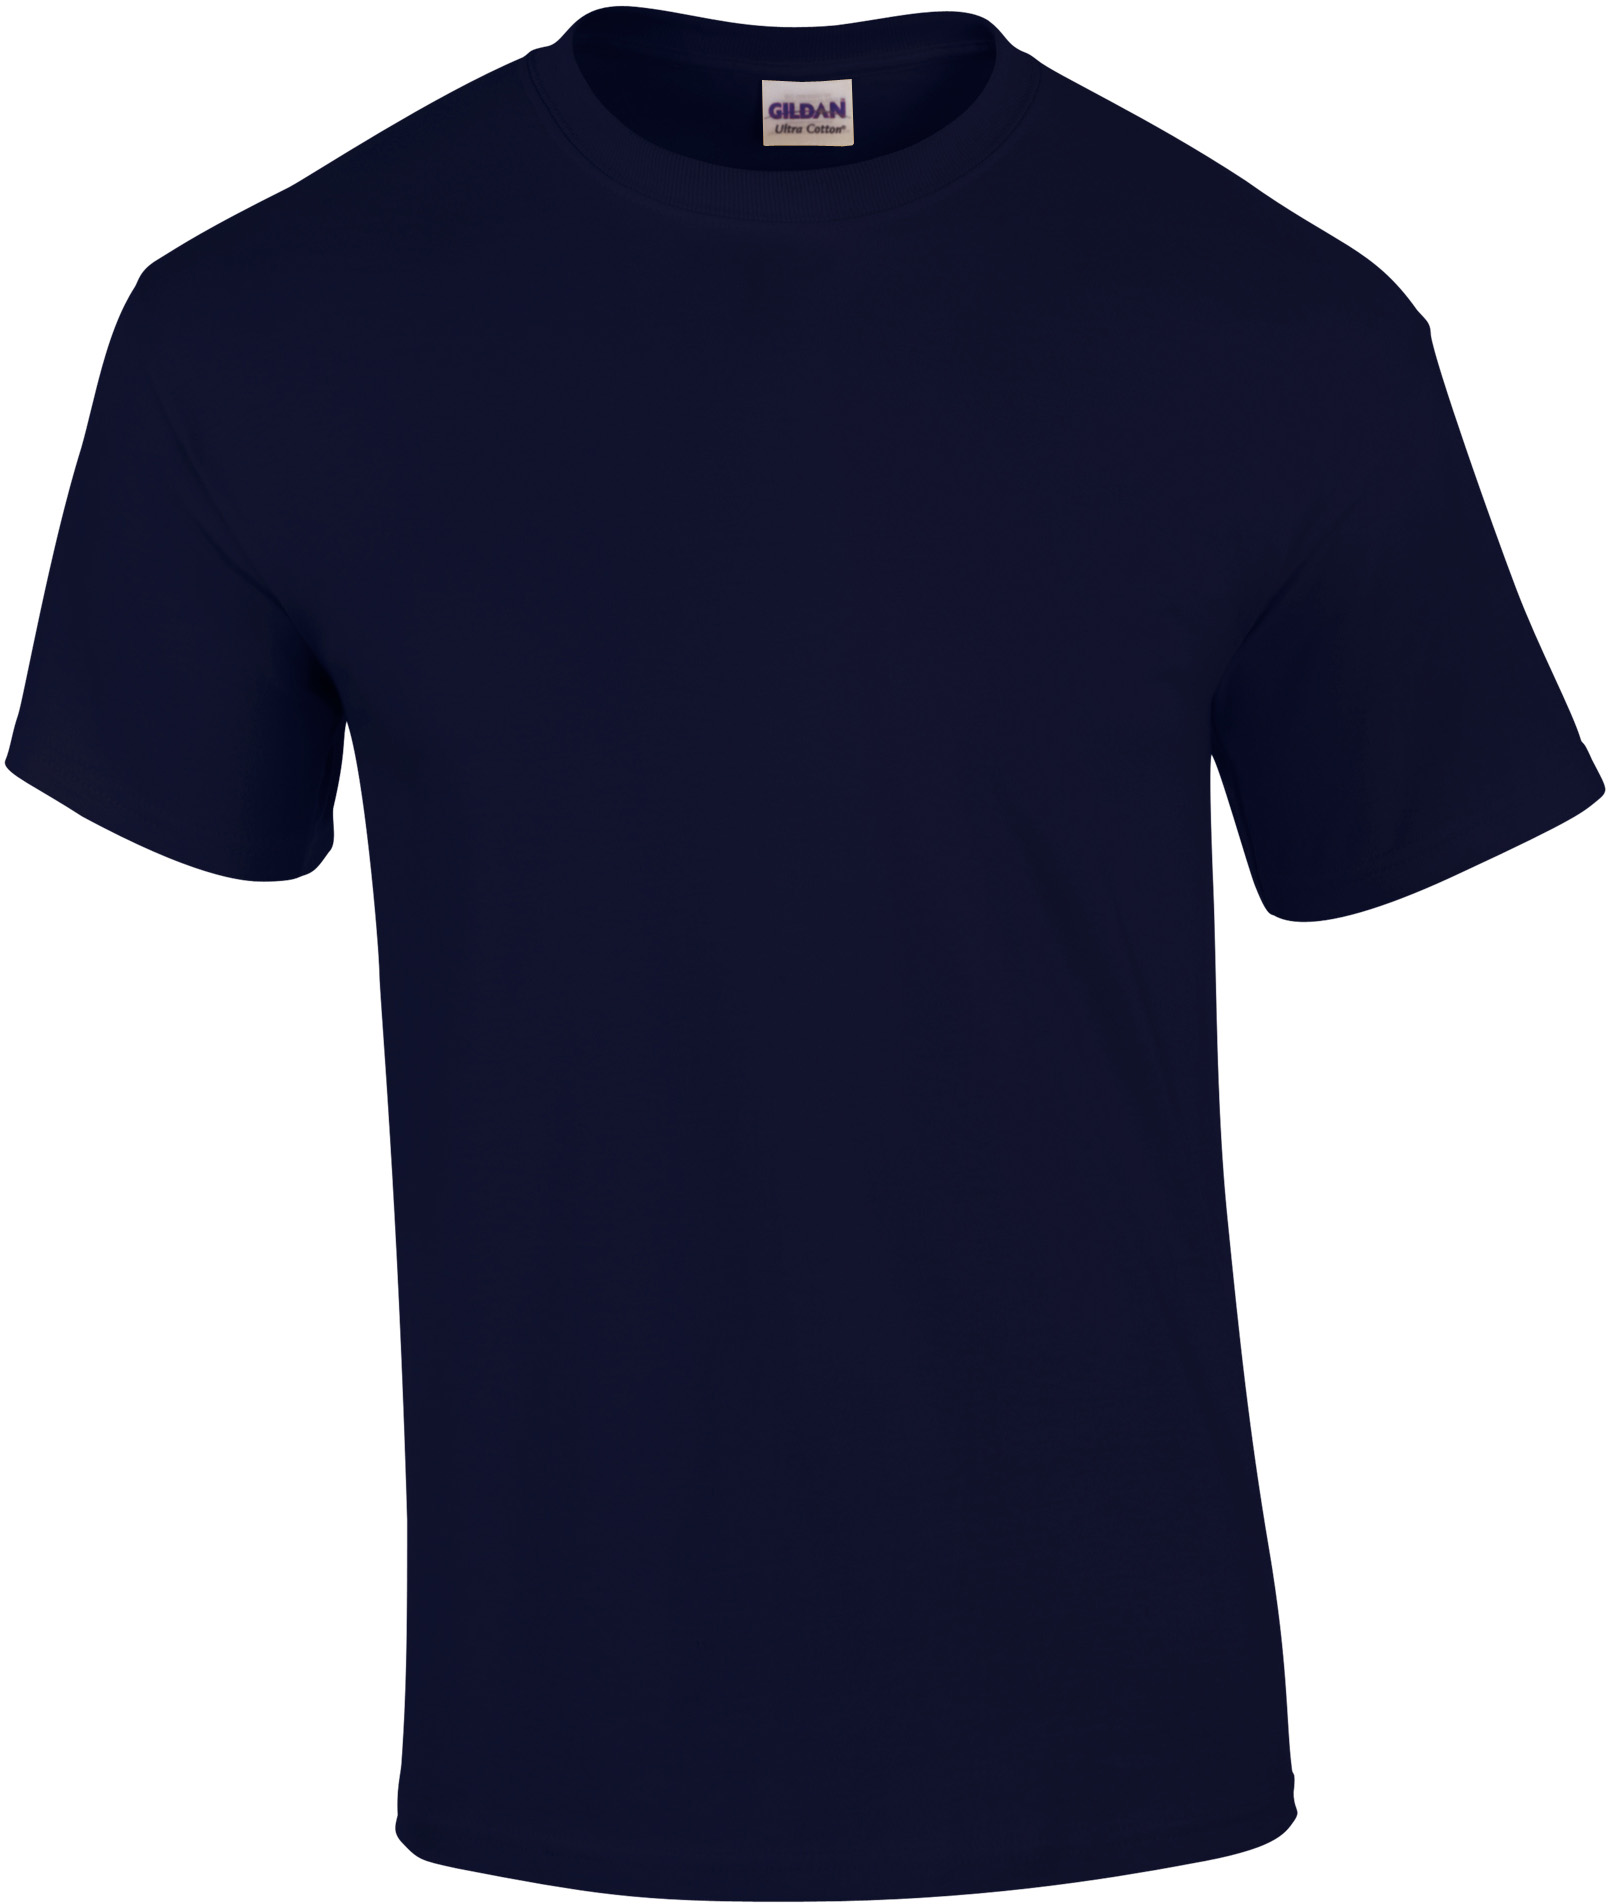 Tričko Gildan Ultra - Námořní modrá 3XL